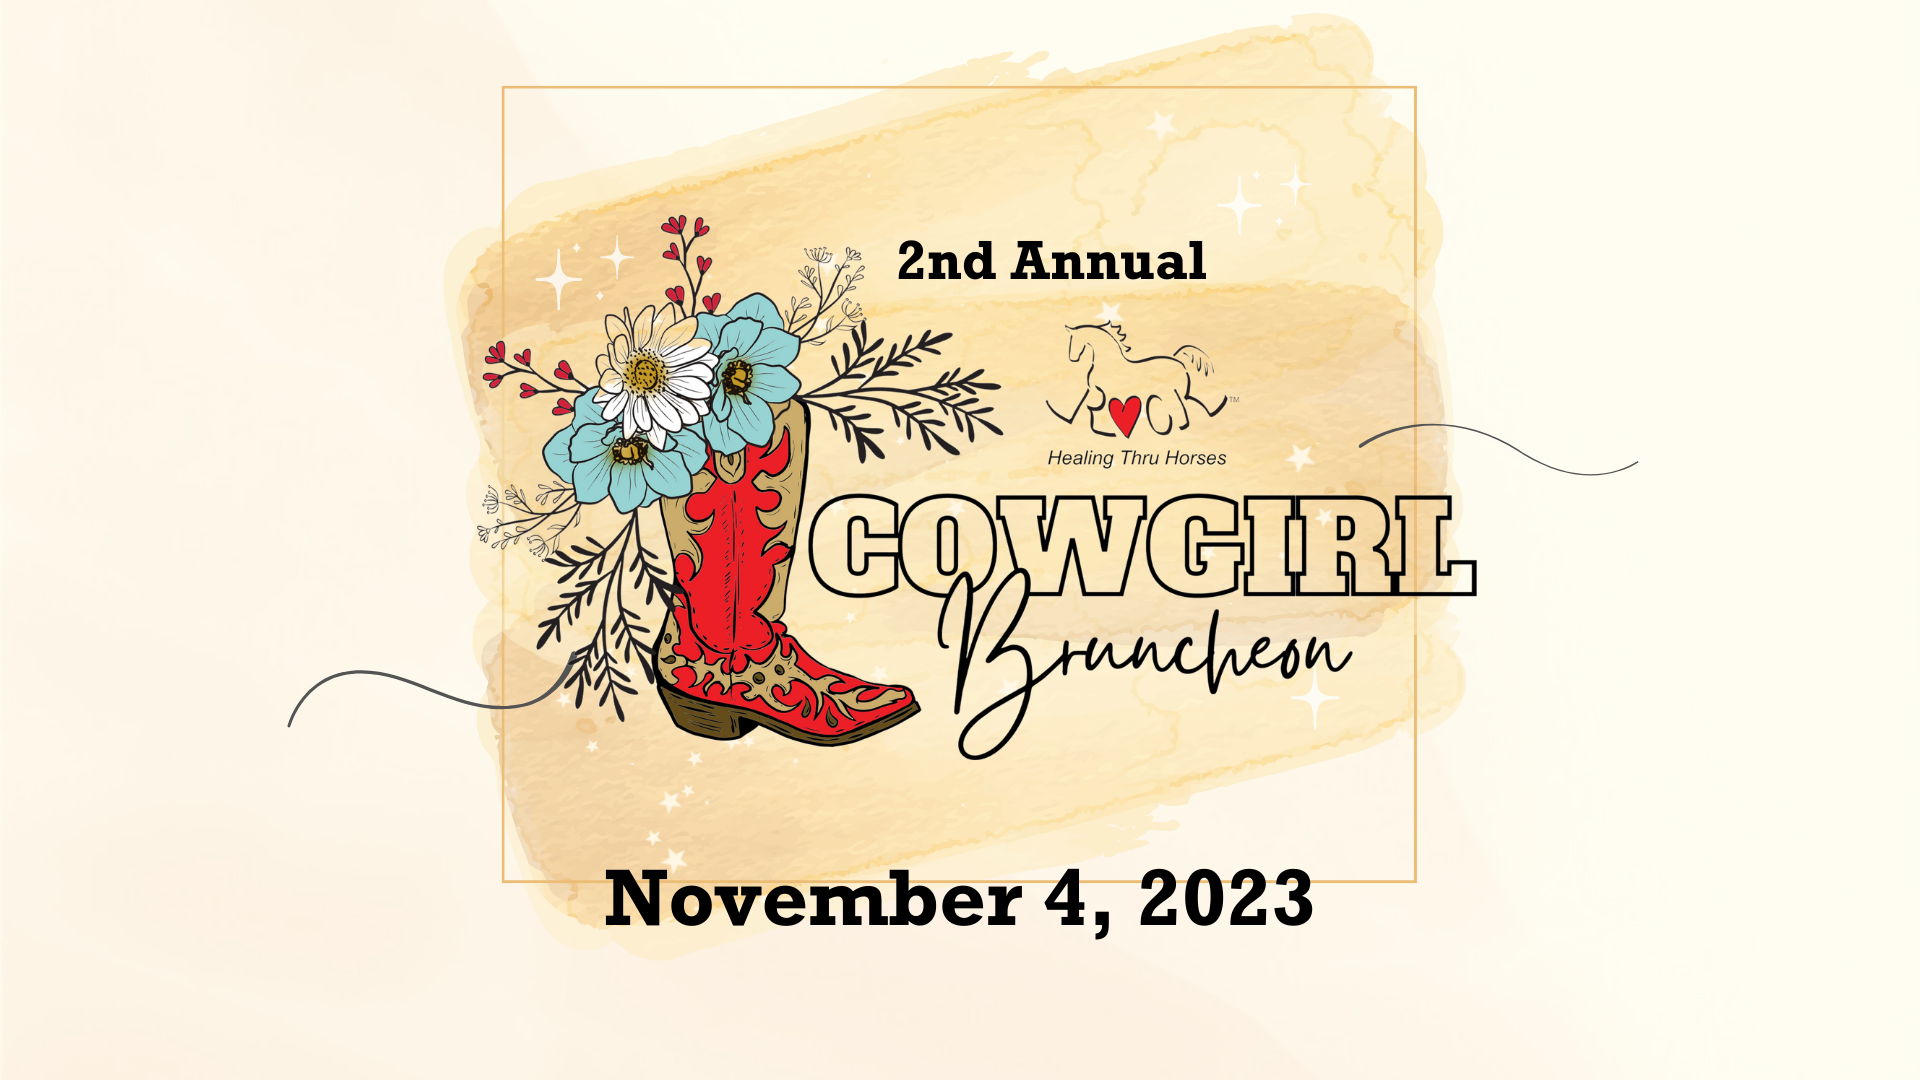 2nd Annual Cowgirl Bruncheon - November 4, 2023